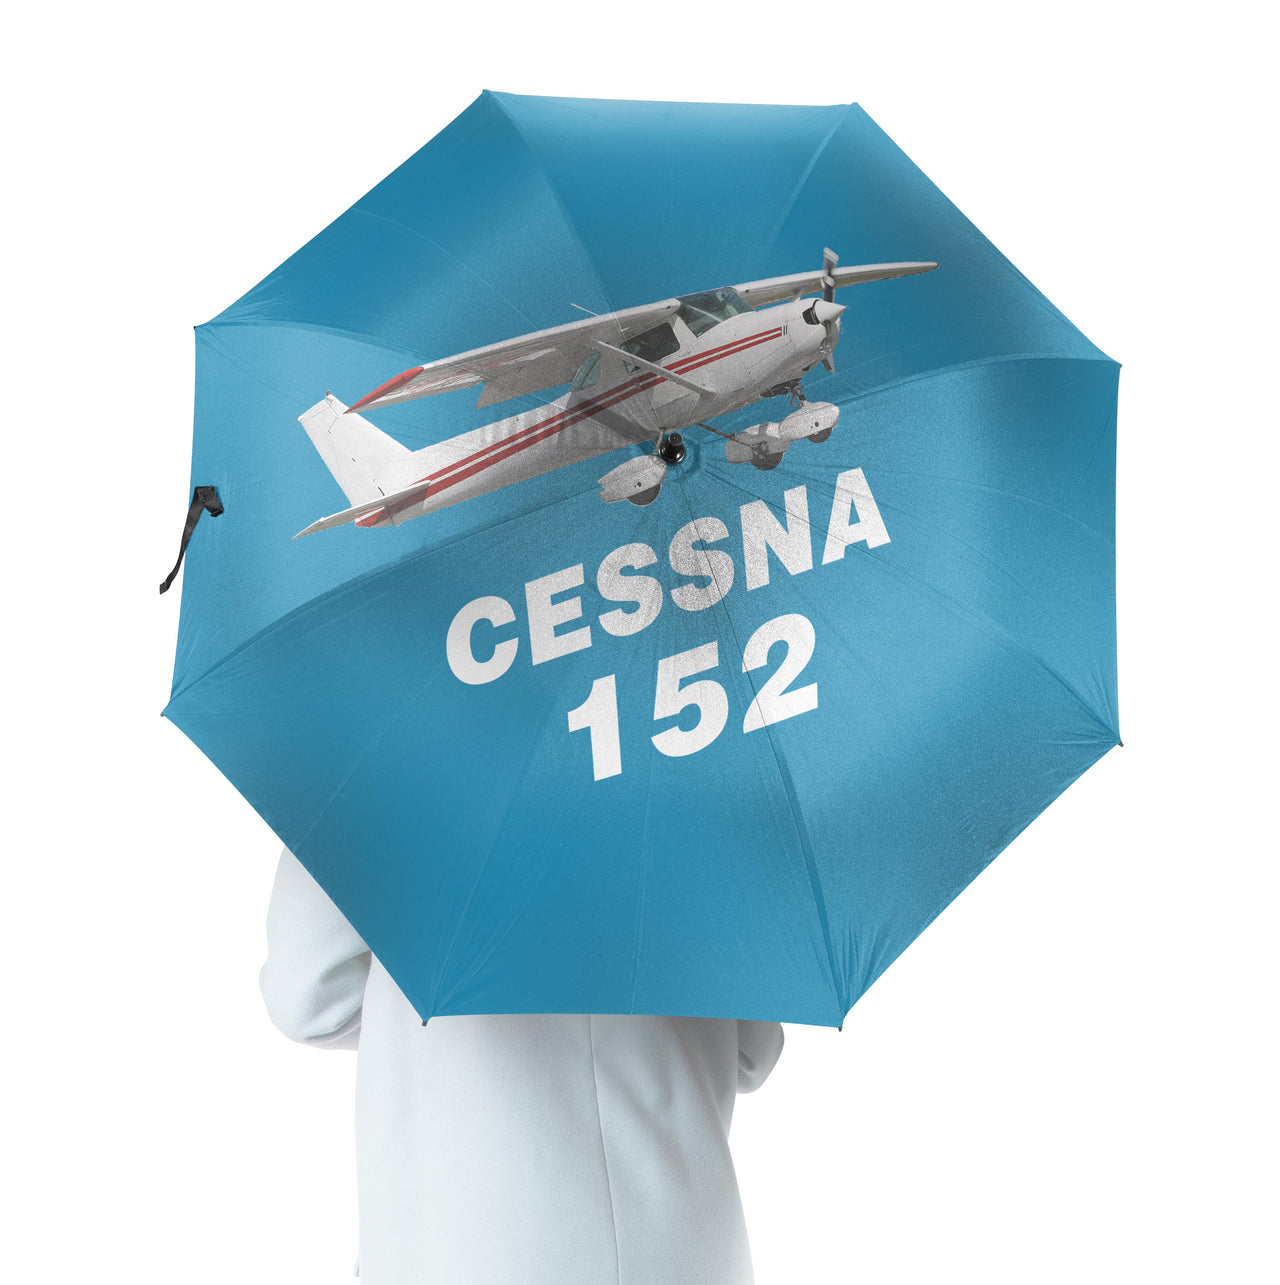 The Cessna 152 Designed Umbrella